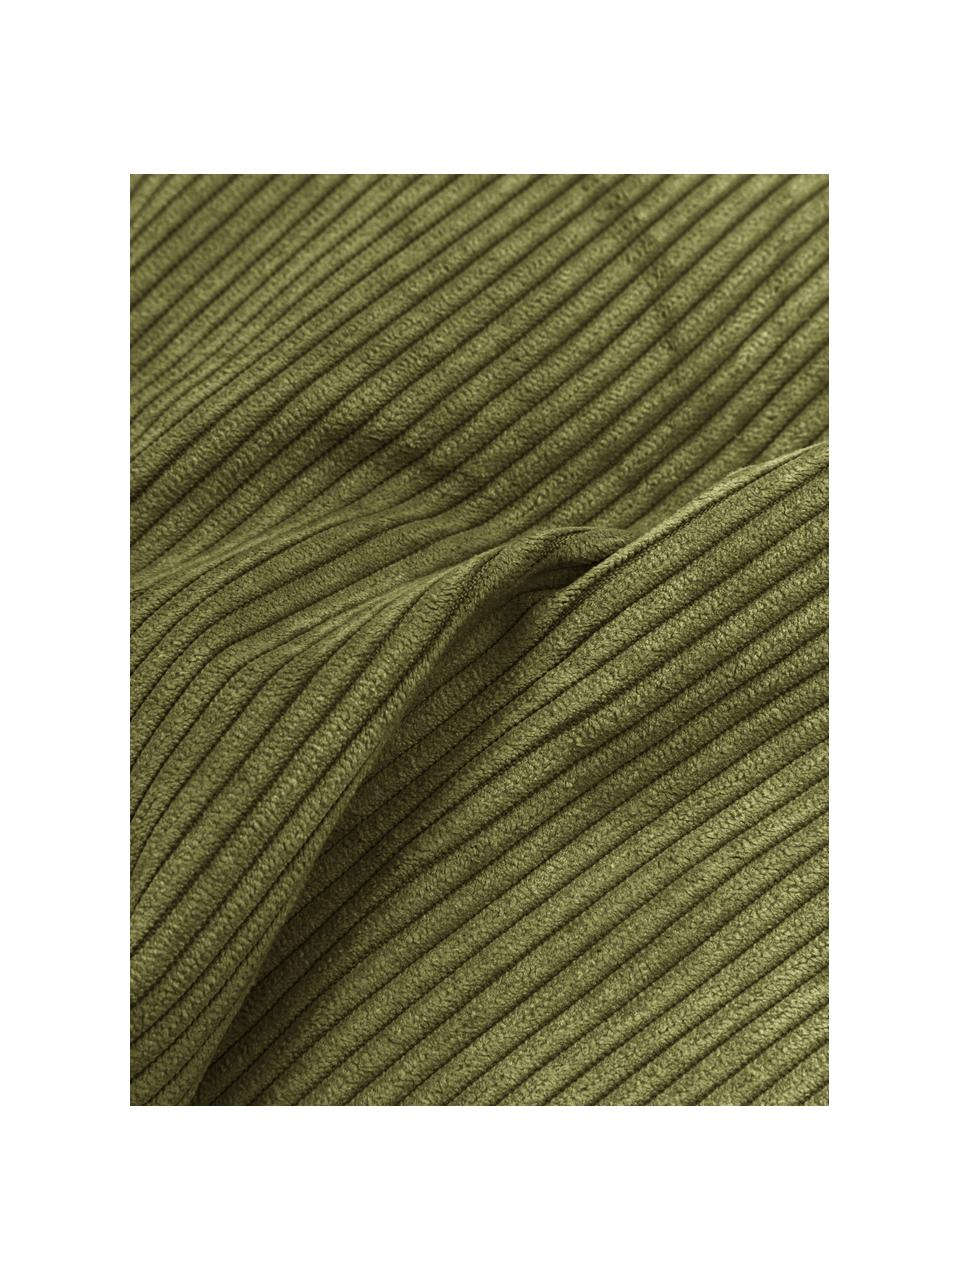 Bankkussen Lennon in groen van corduroy, Corduroy groen, B 60 x L 60 cm